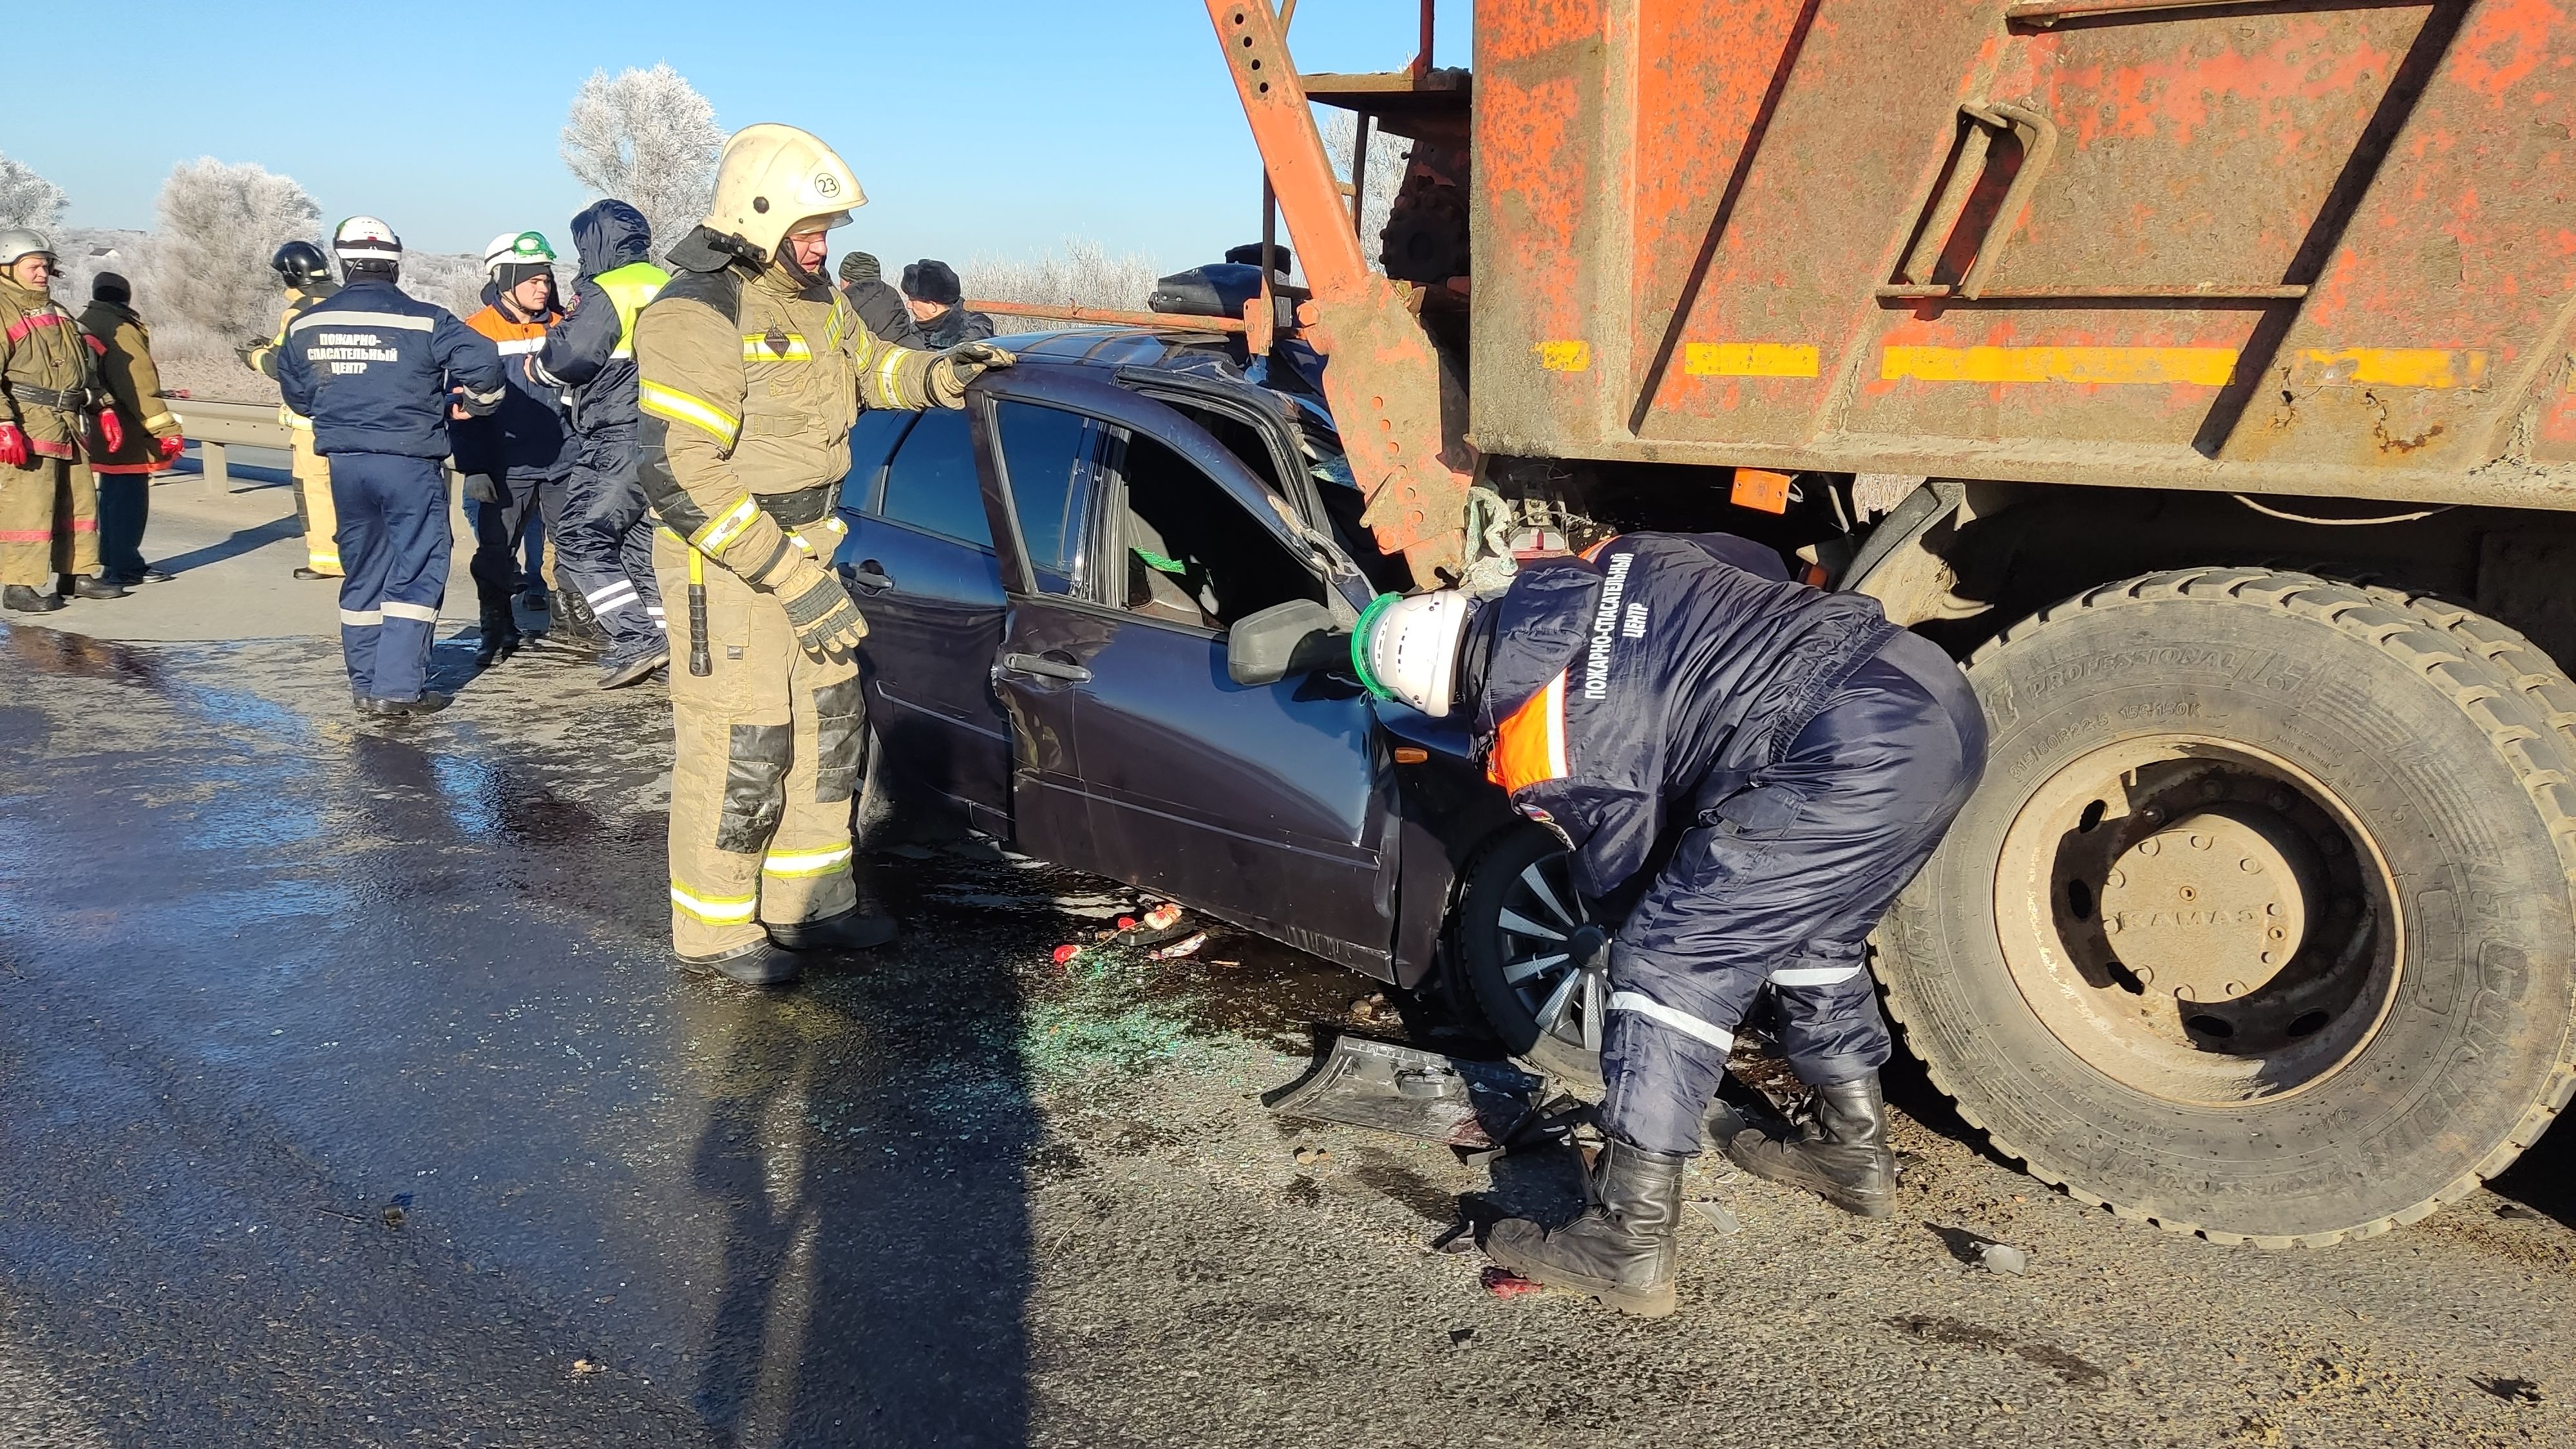 В аварии на трассе в Пензенской области от удара зажало водителя и пассажира легковушки